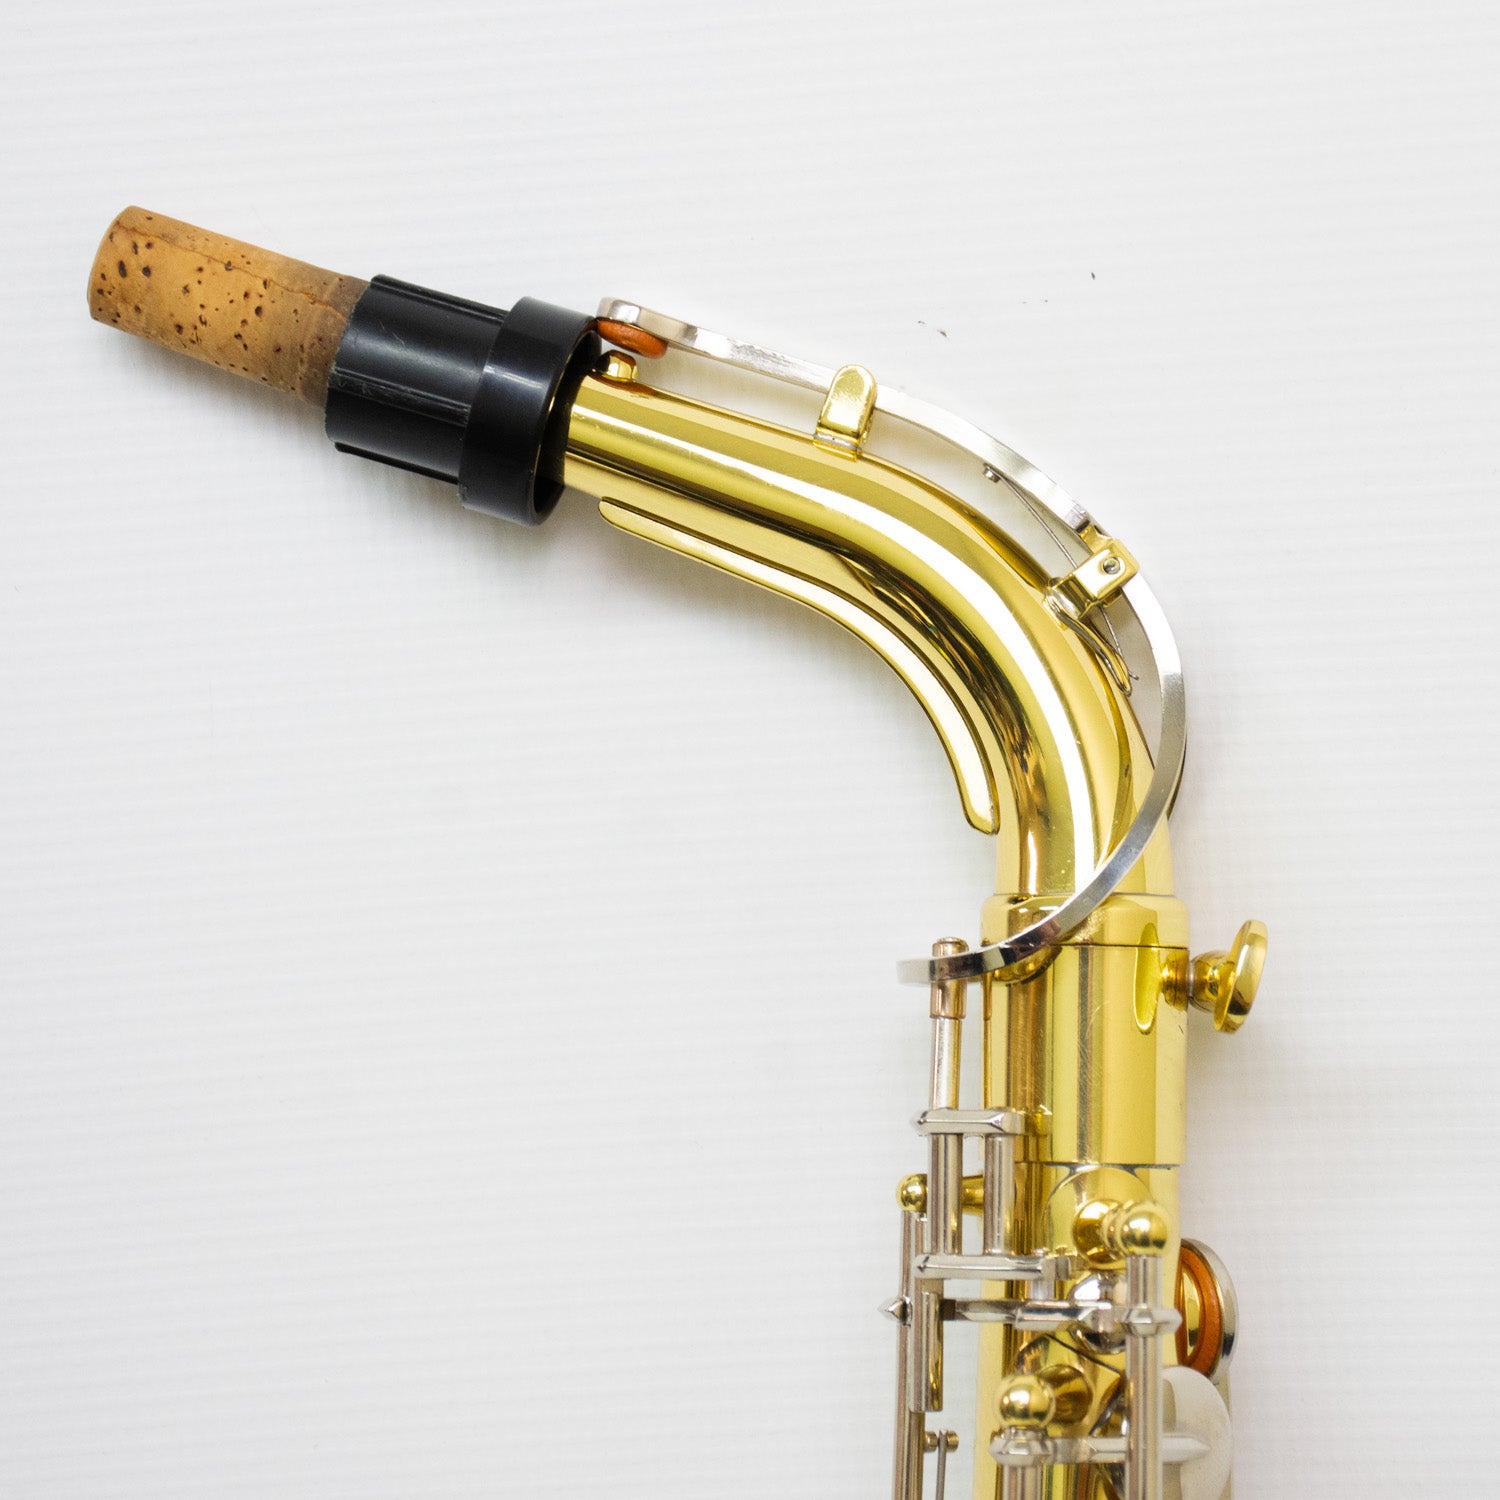 Yamaha YAS-23 10 Alto Saxophone